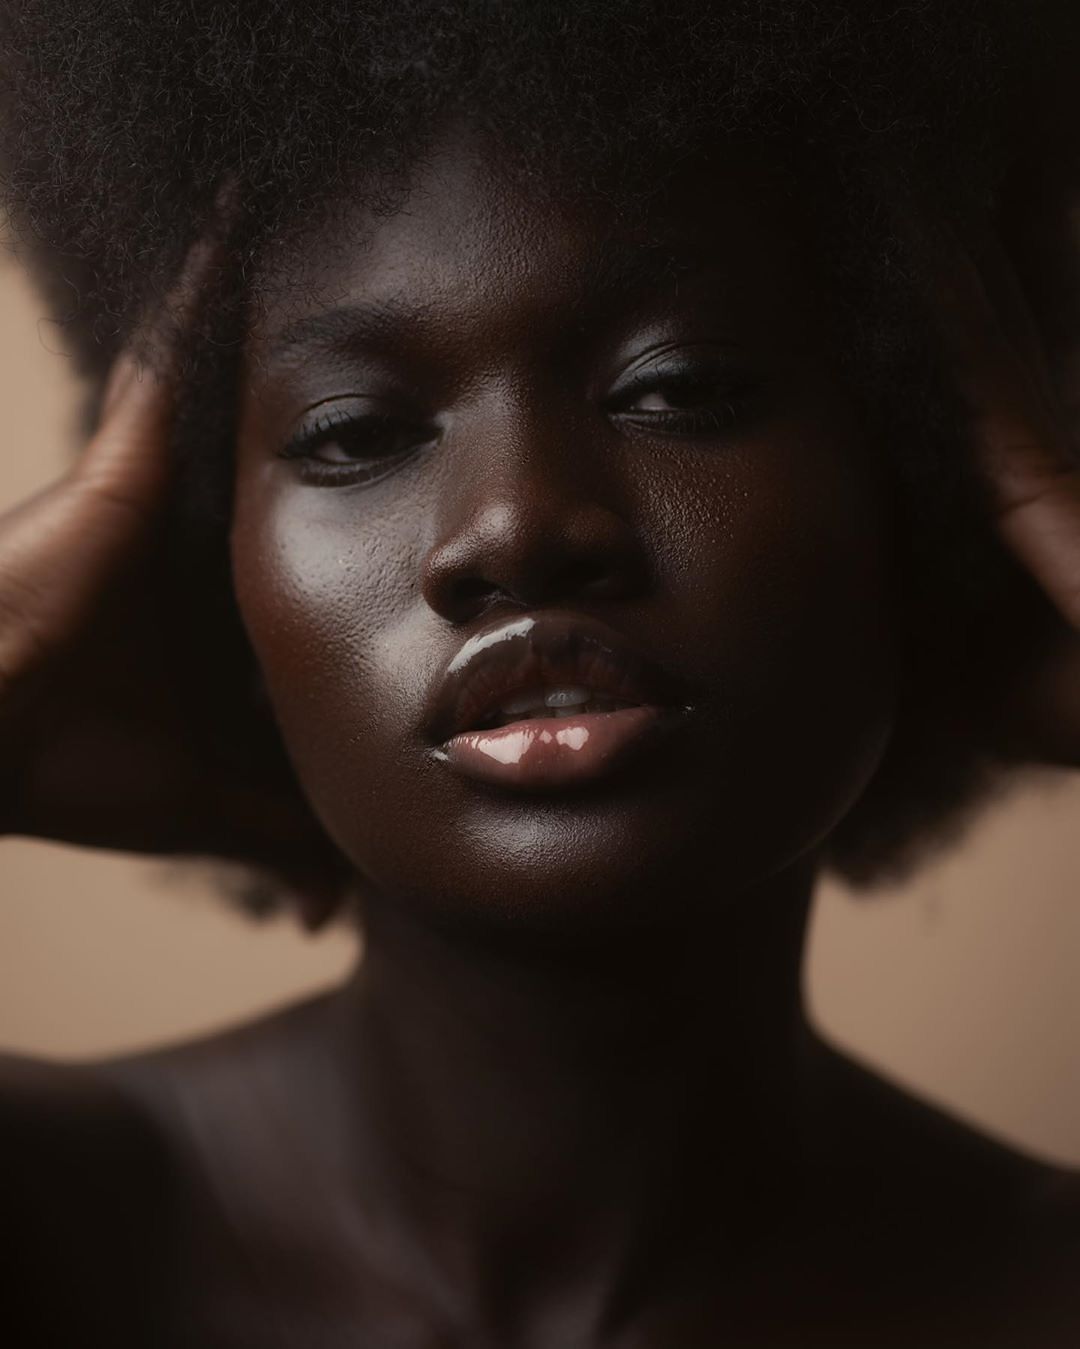 Styles | Un-ruly - Styles | Un-ruly -   19 beauty Black photography ideas